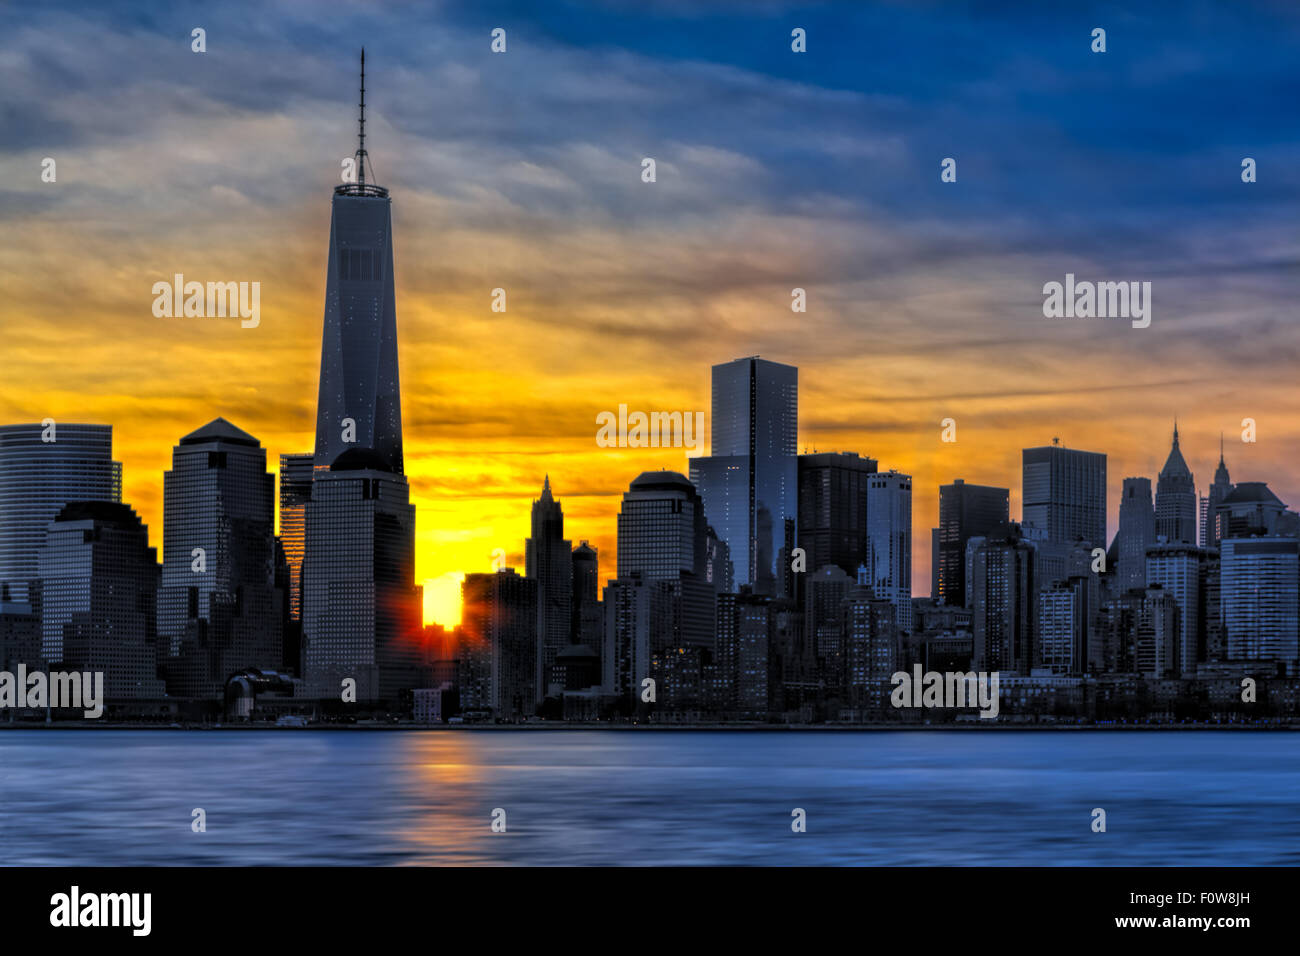 Sunrise at One World Trade Center (Freedom Tower) in the lower Manhattan New York City skyline. Stock Photo